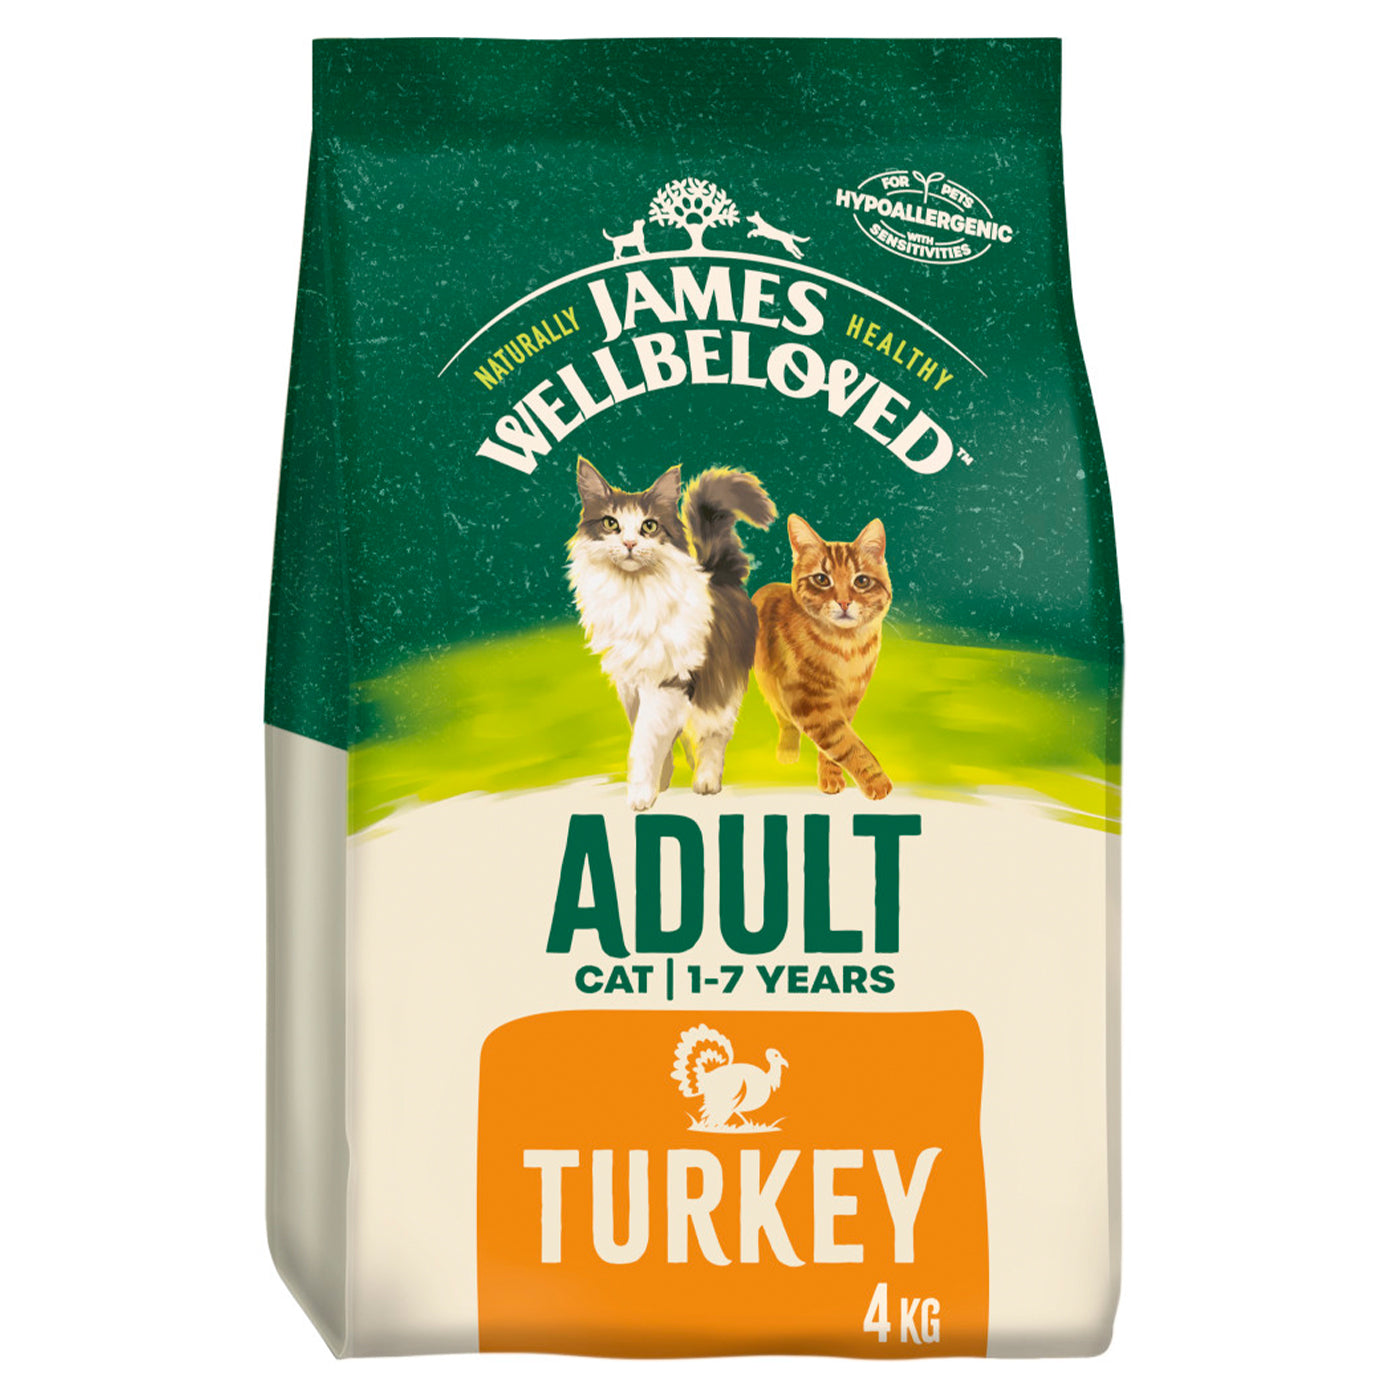 James Wellbeloved Adult Cat Turkey Food 4KG